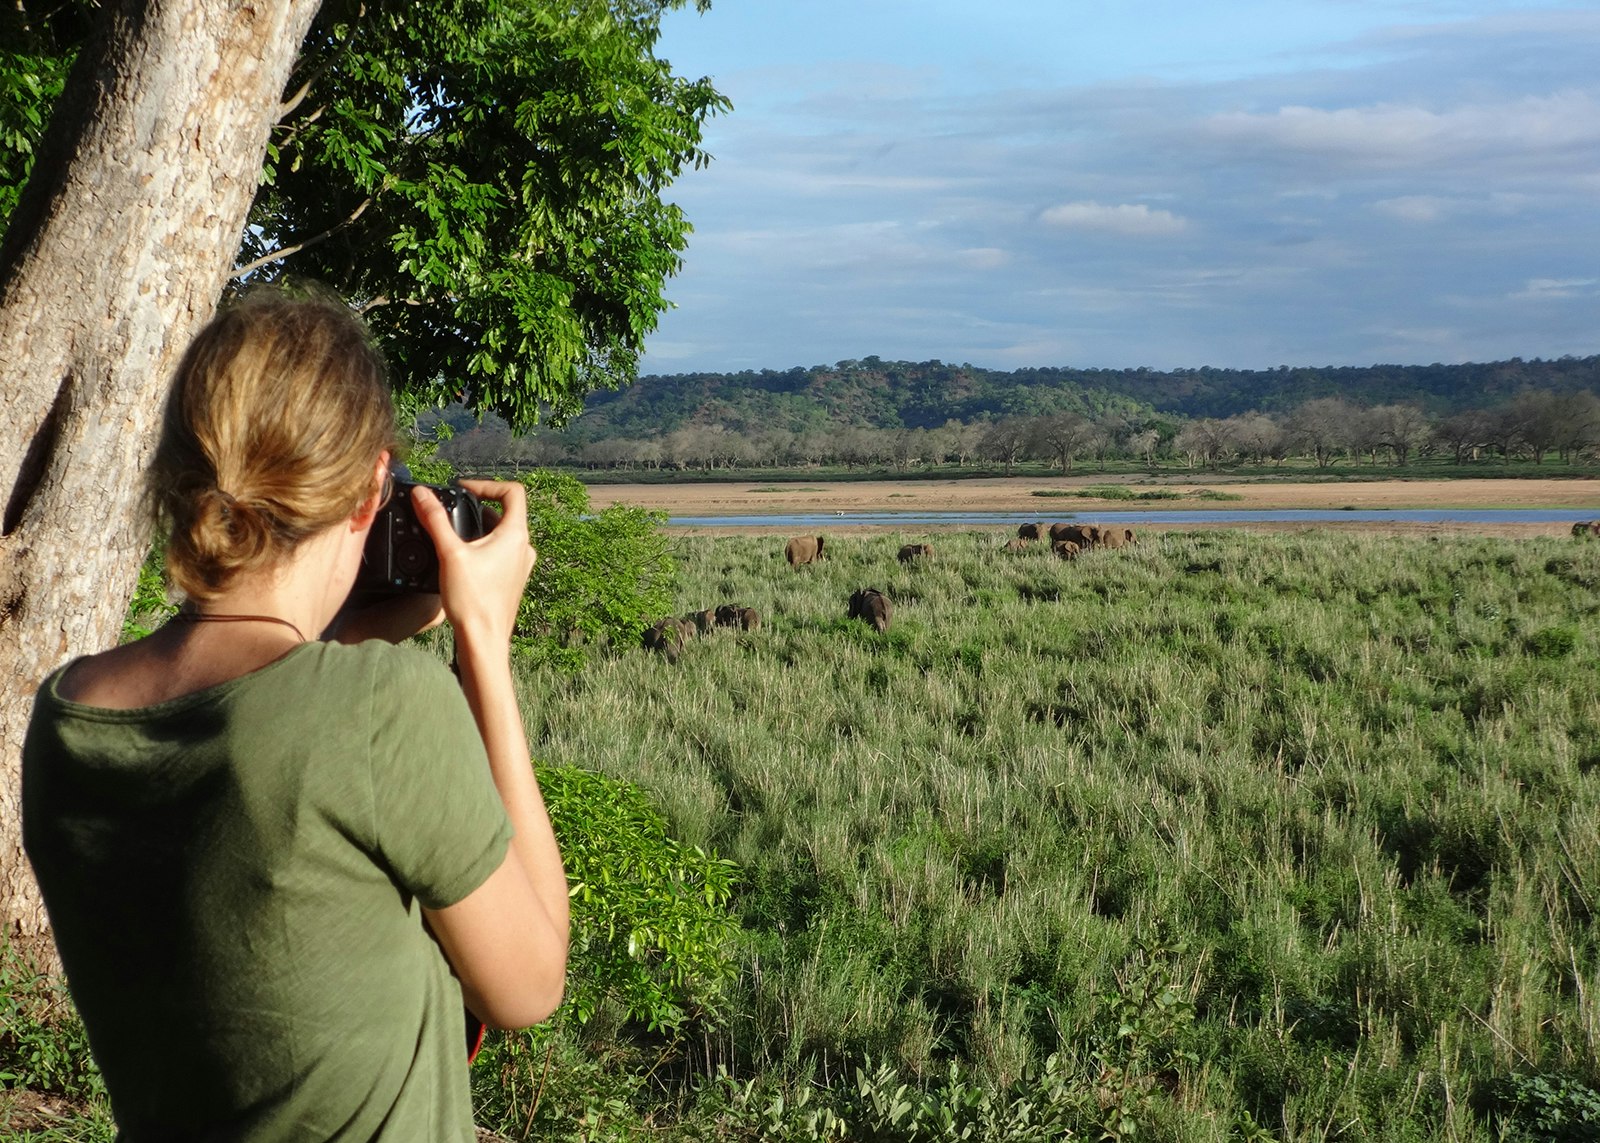 Elizabeth Gordon taking photos of elephants at waterhole in Africa © Elizabeth Gordon